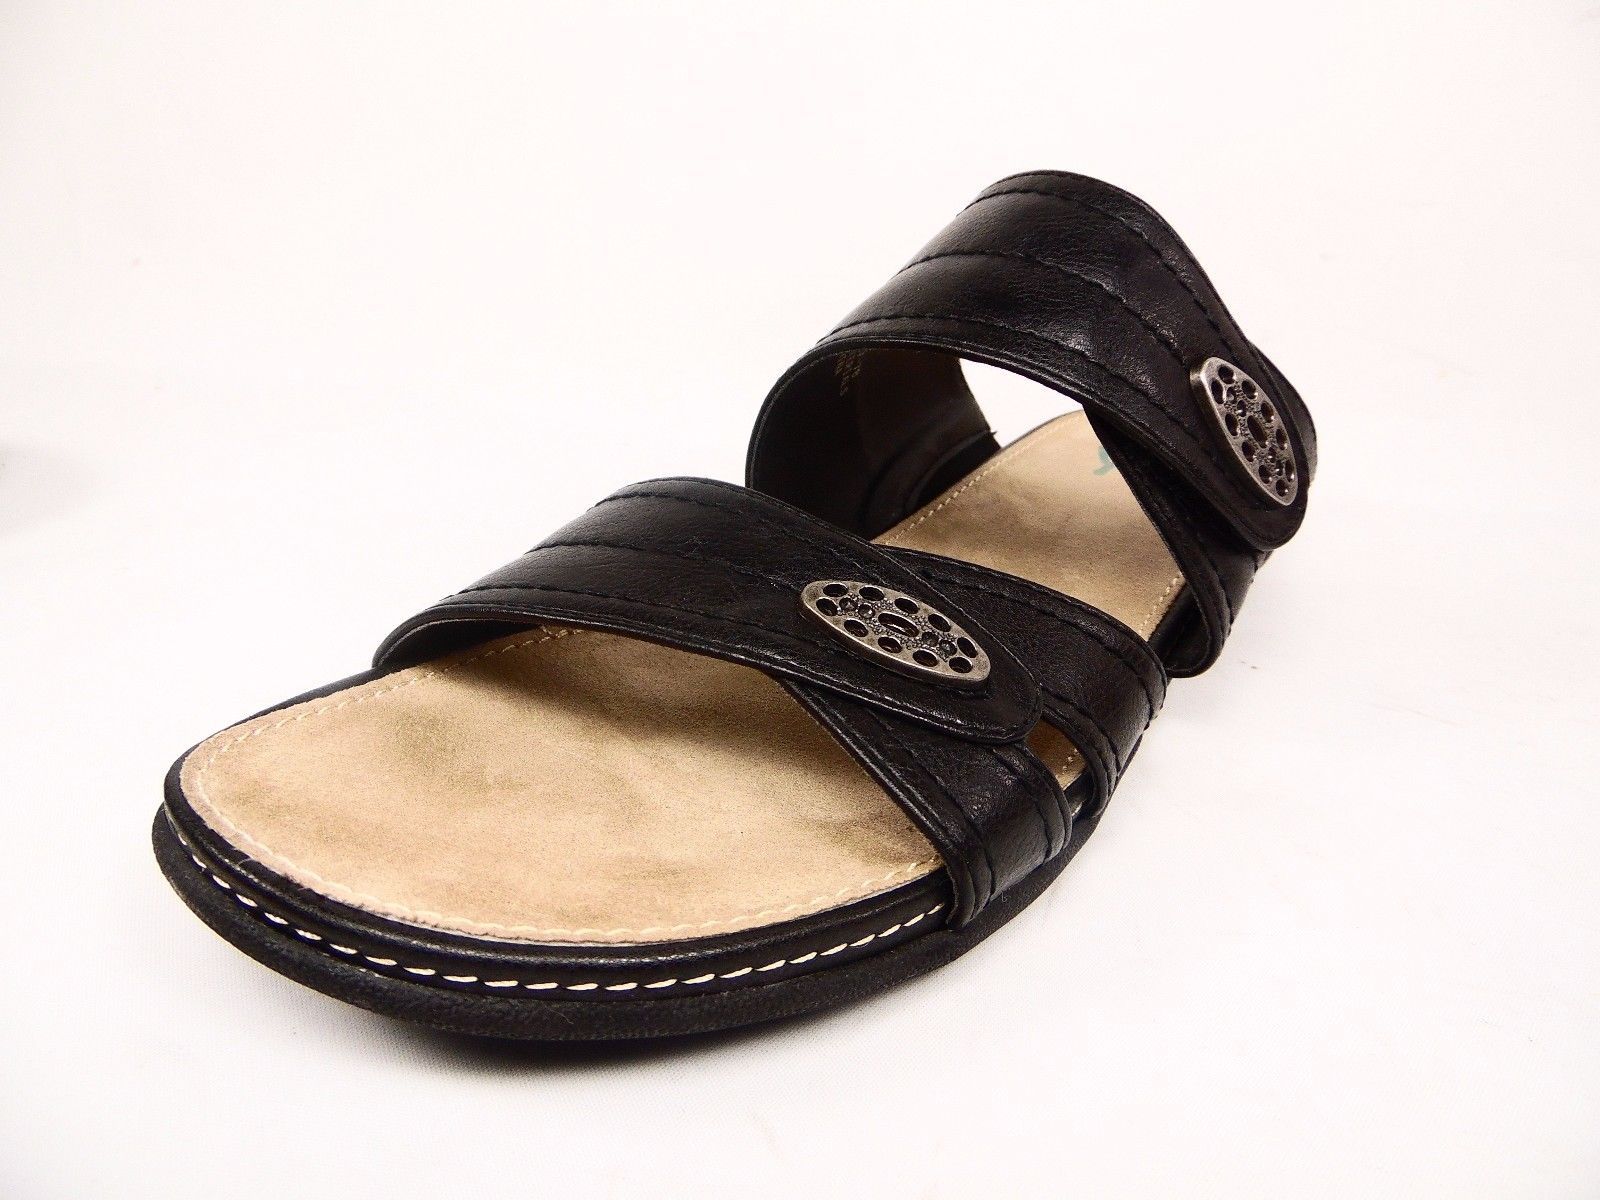 Yuu Atana Womens Slide Sandals Black Size 8.5M - Sandals & Flip Flops